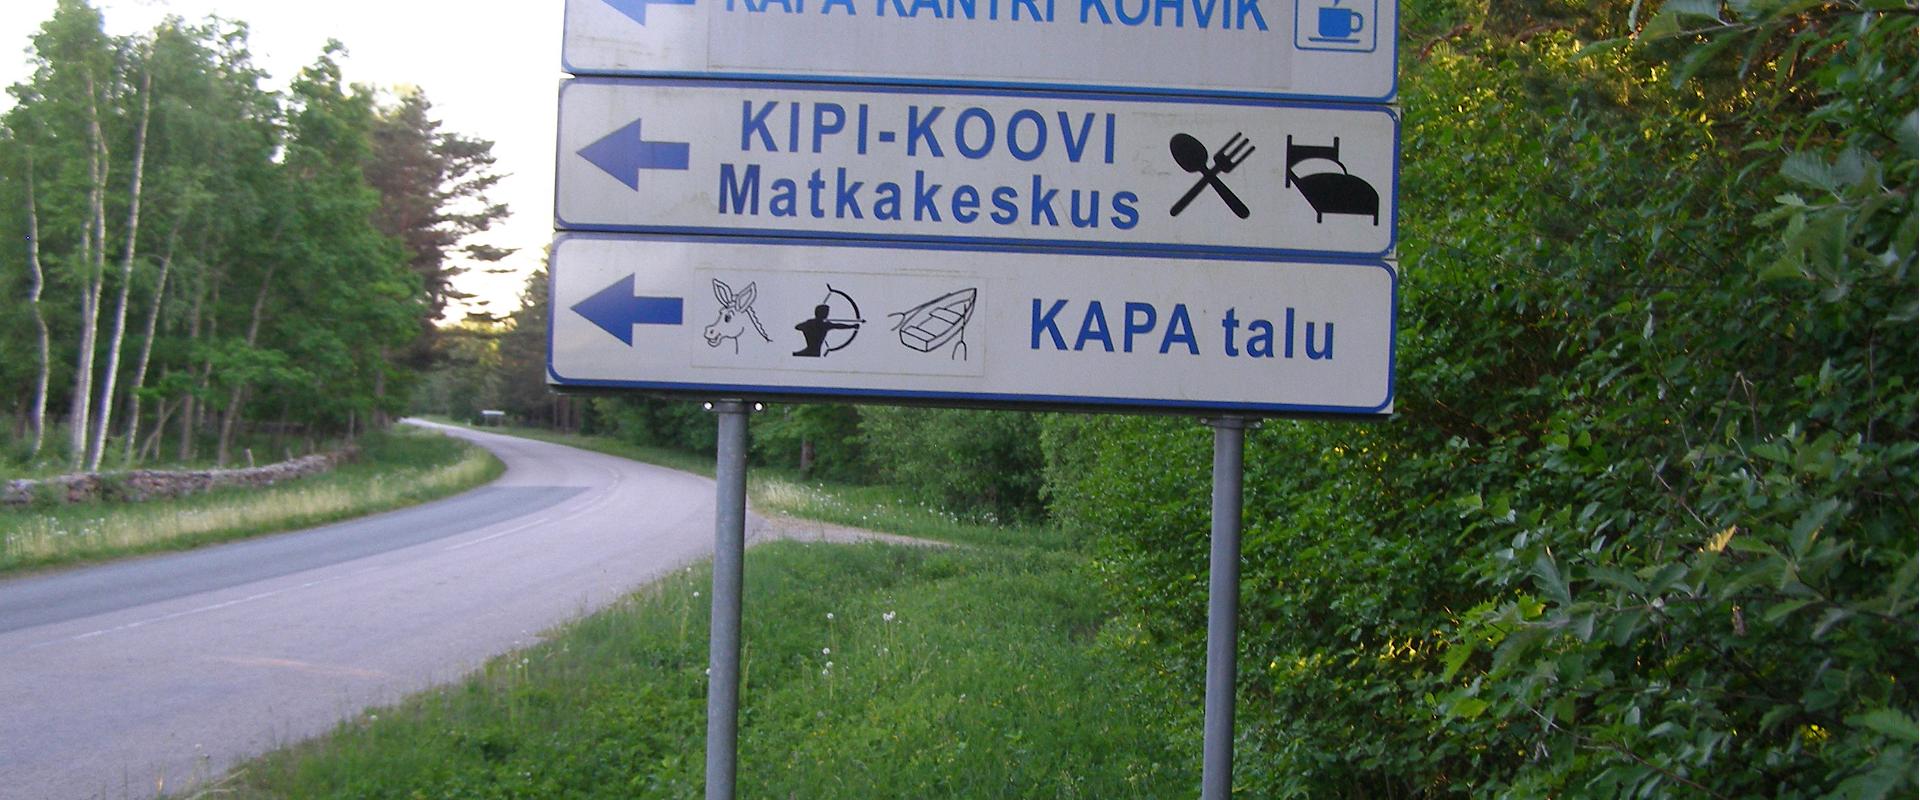 Wanderzentrum Kipi-Koovi